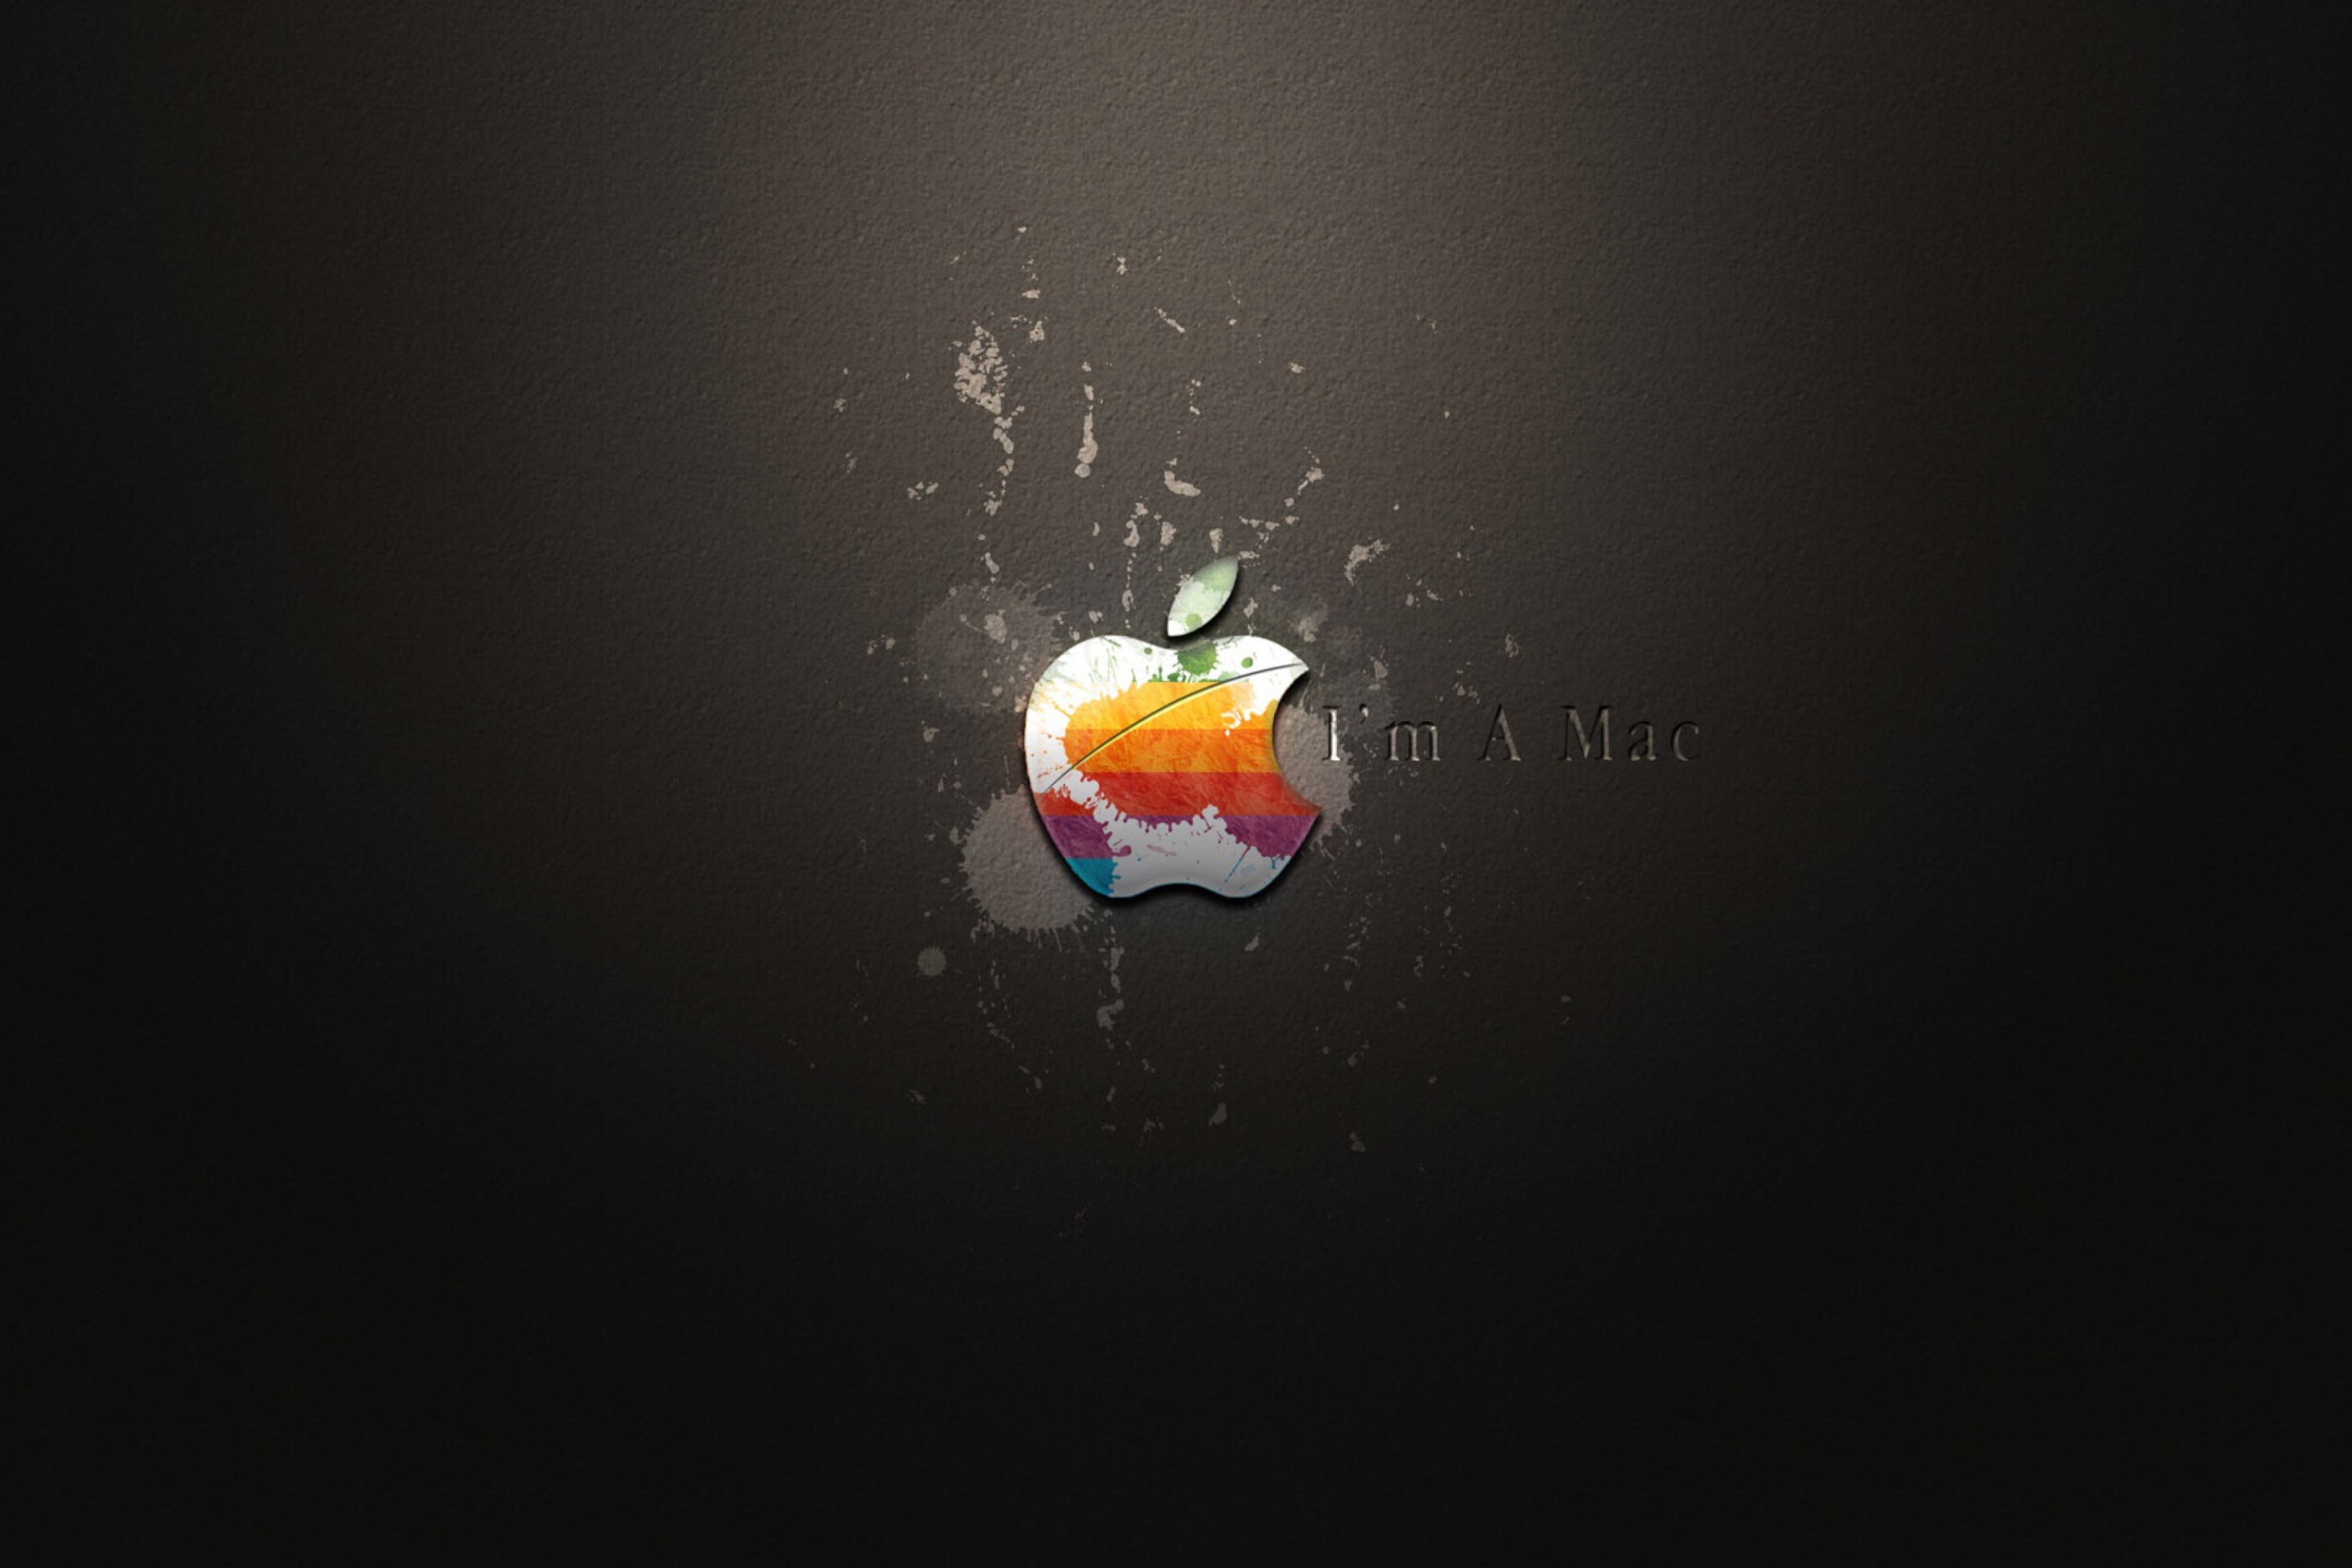 Das Apple I'm A Mac Wallpaper 2880x1920